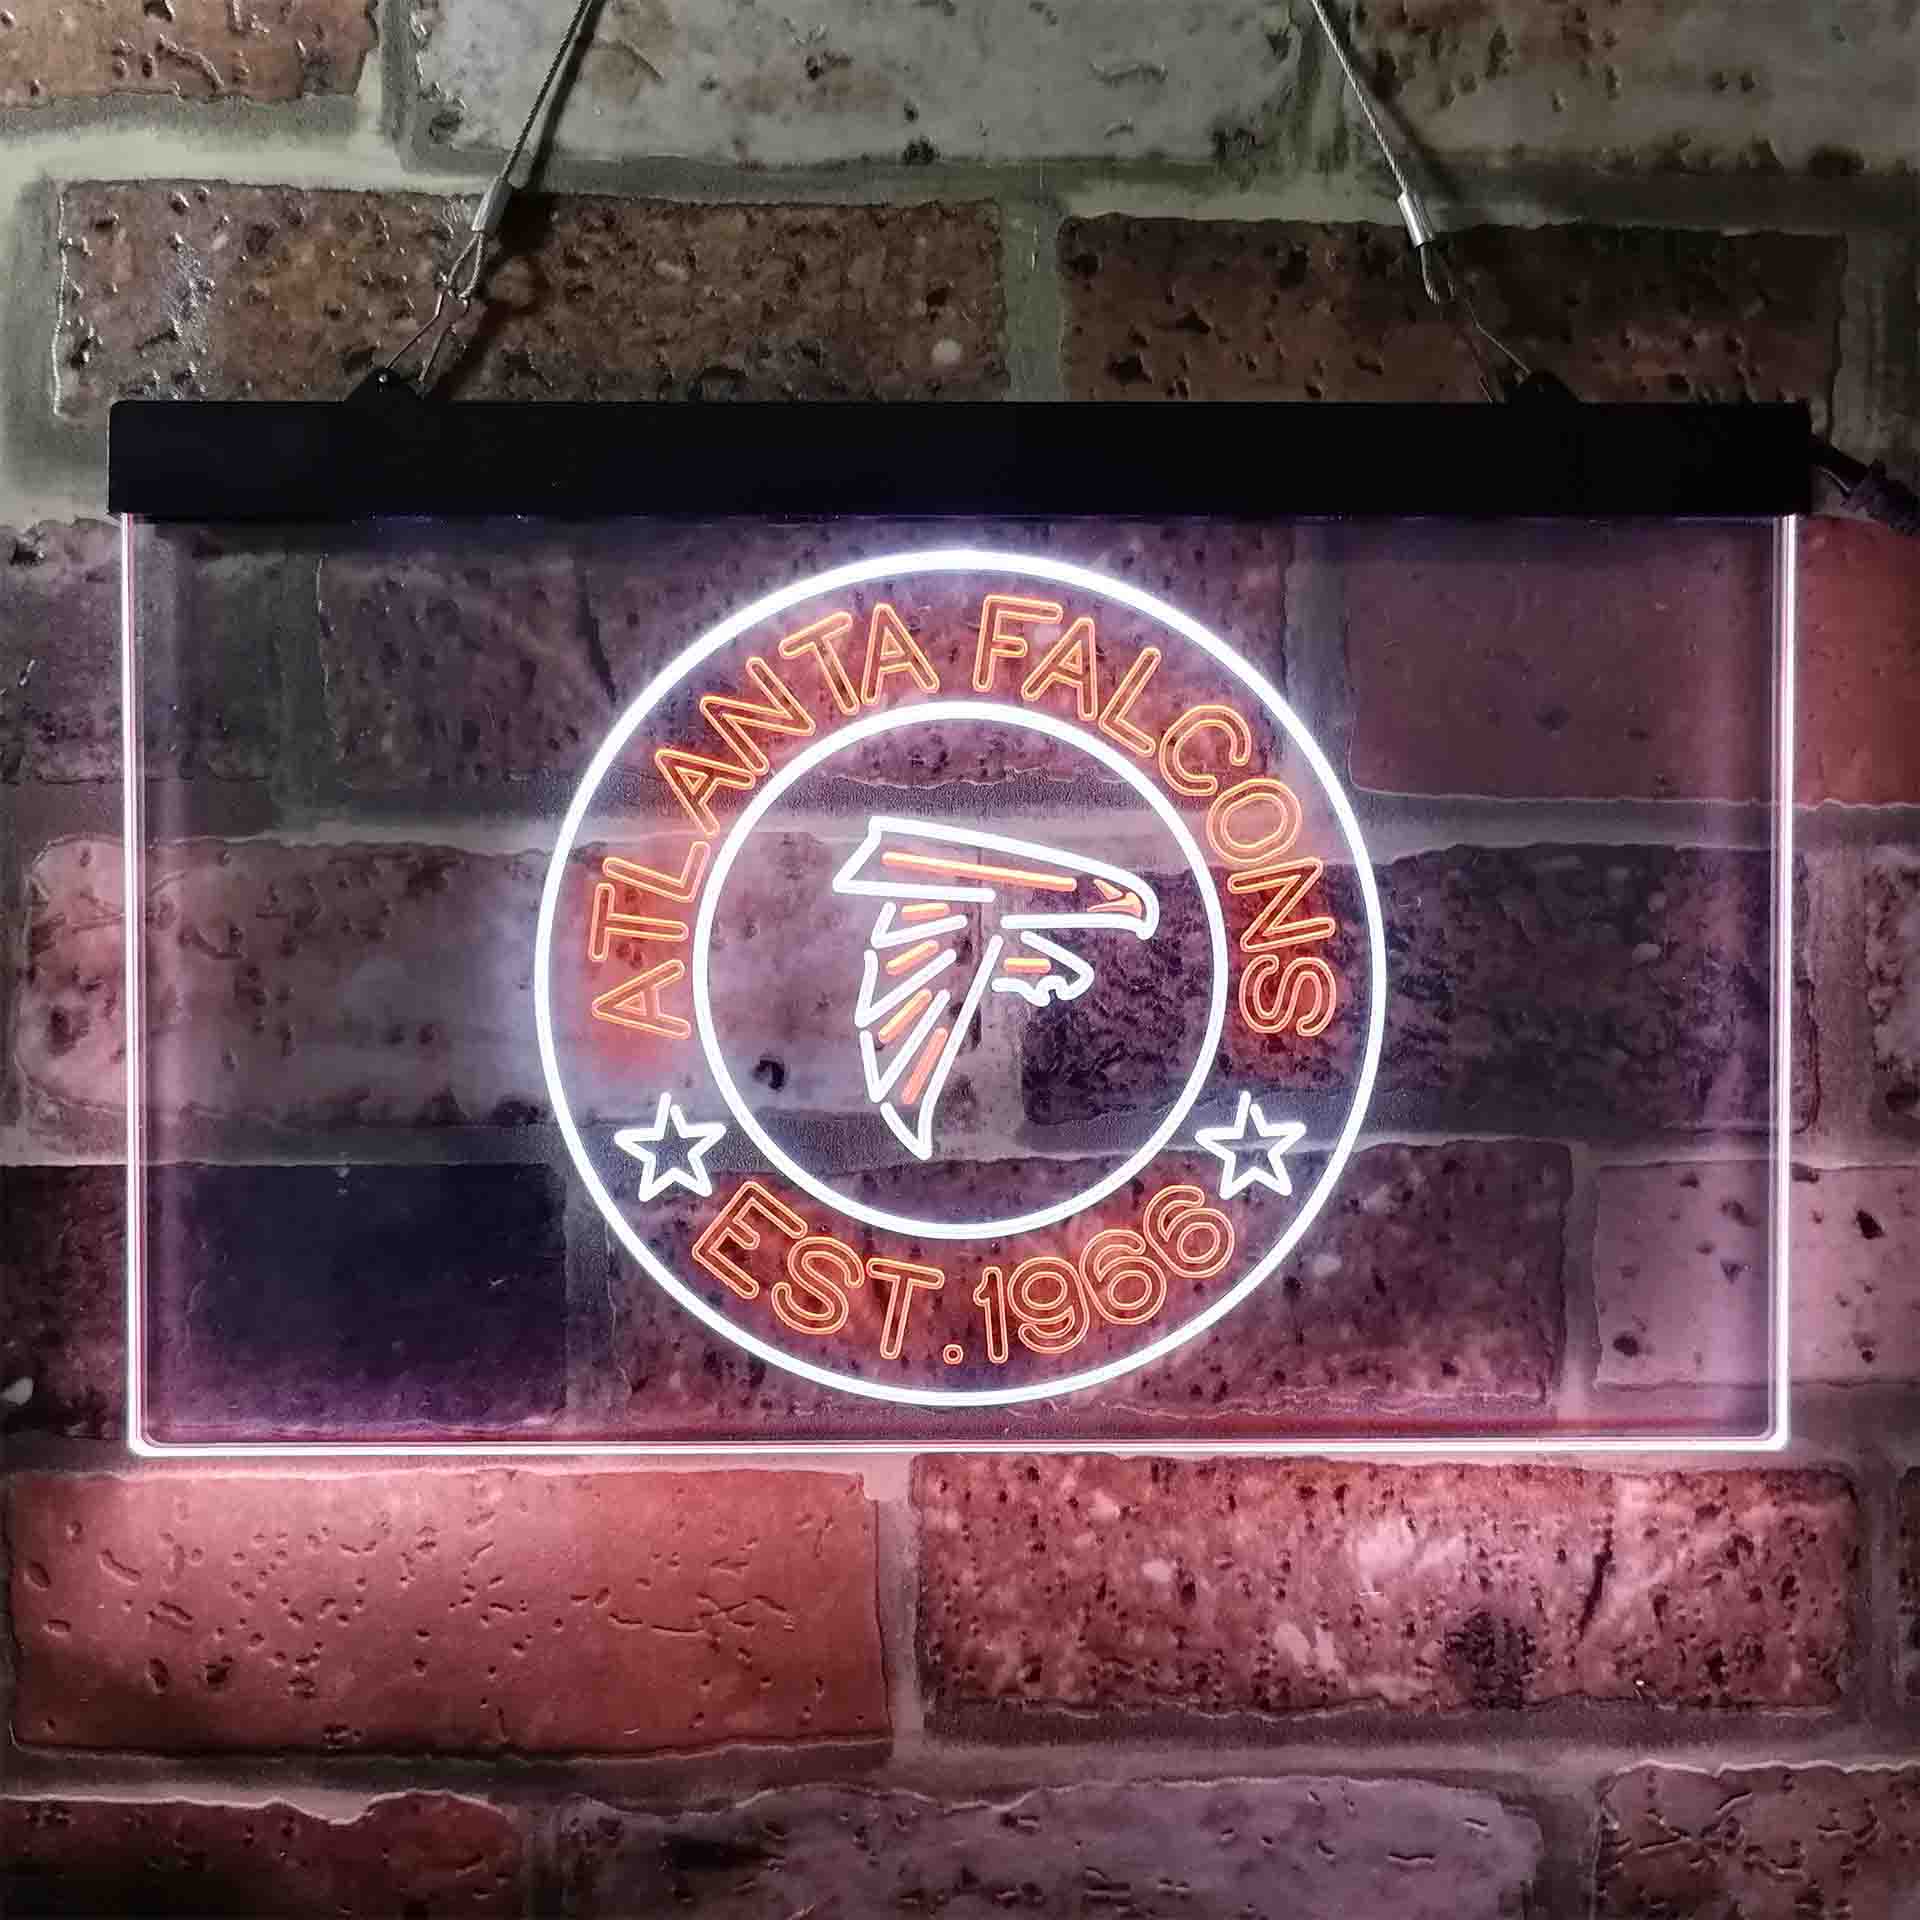 Personalized Atlanta Falcons Neon-Like LED Sign - ProLedSign